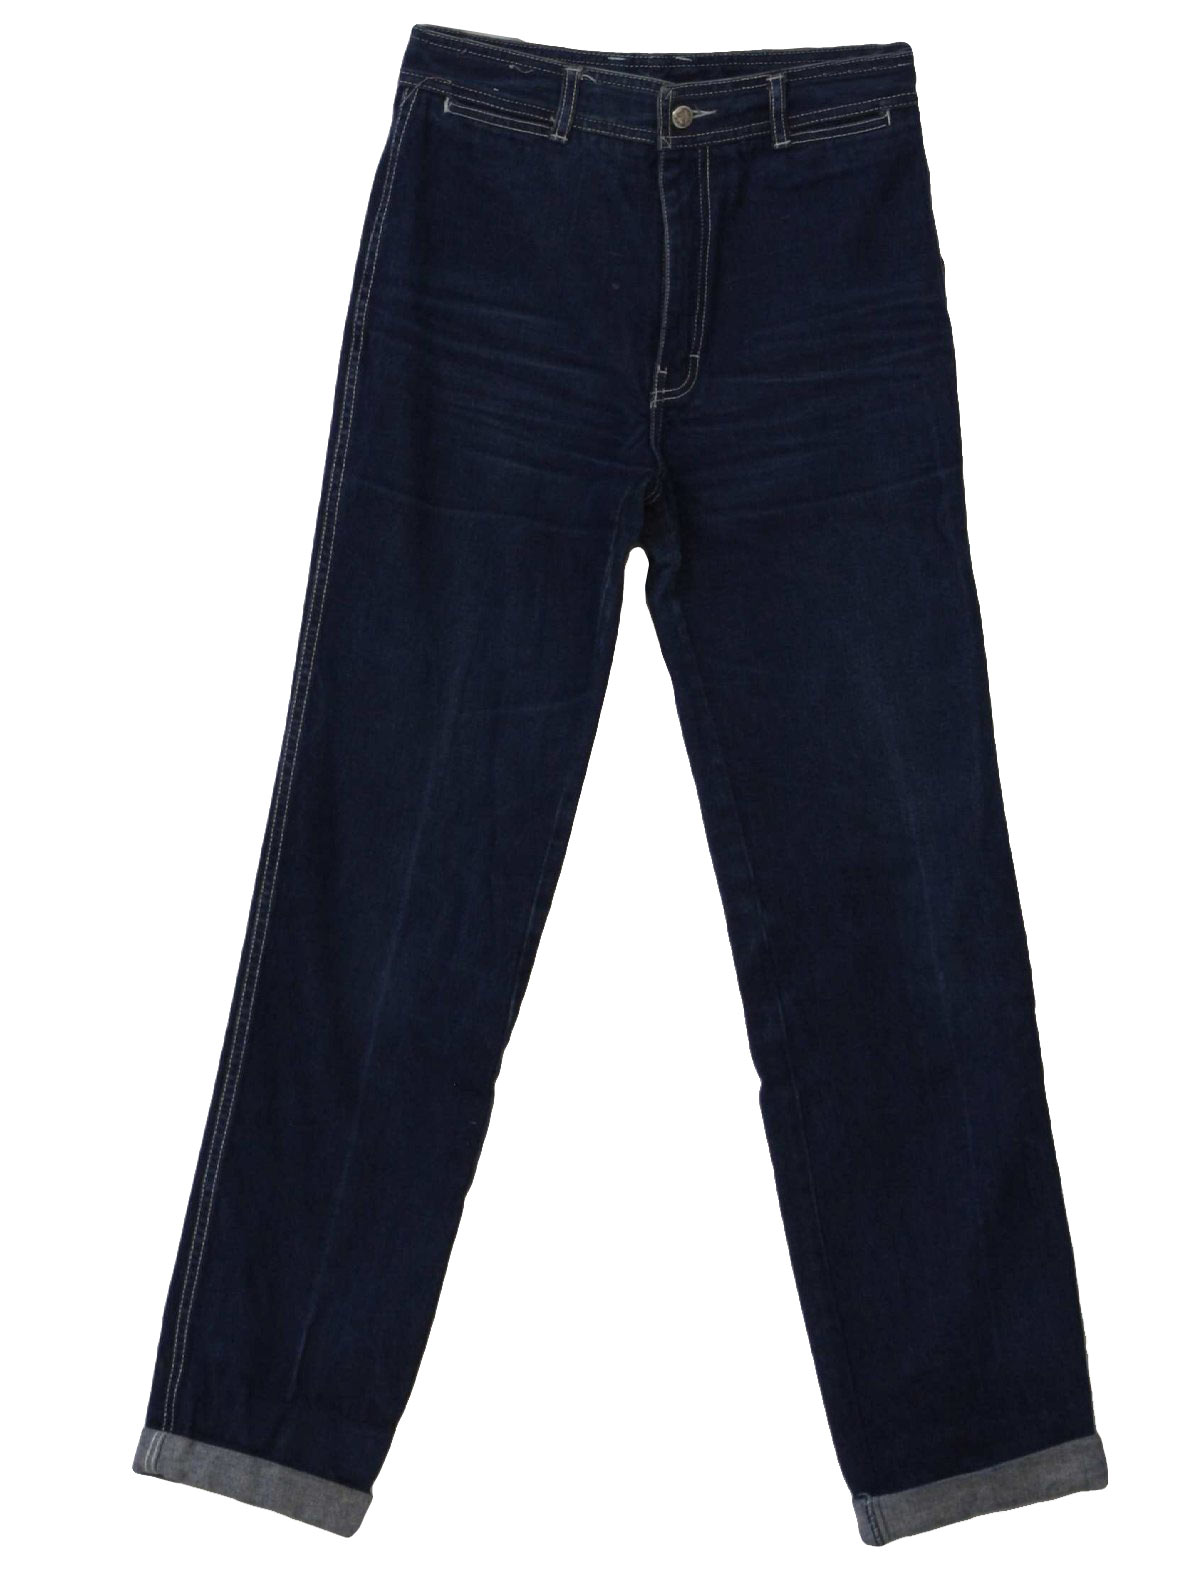 jordache jeans - AOL Image Search Results